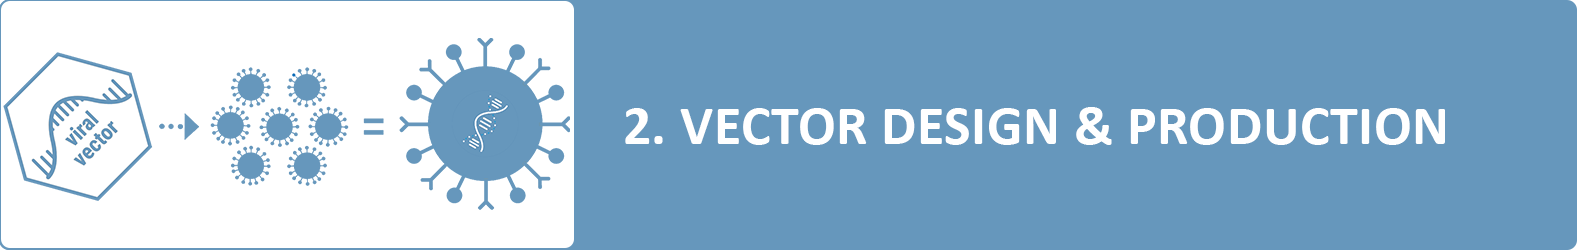 vector design & production